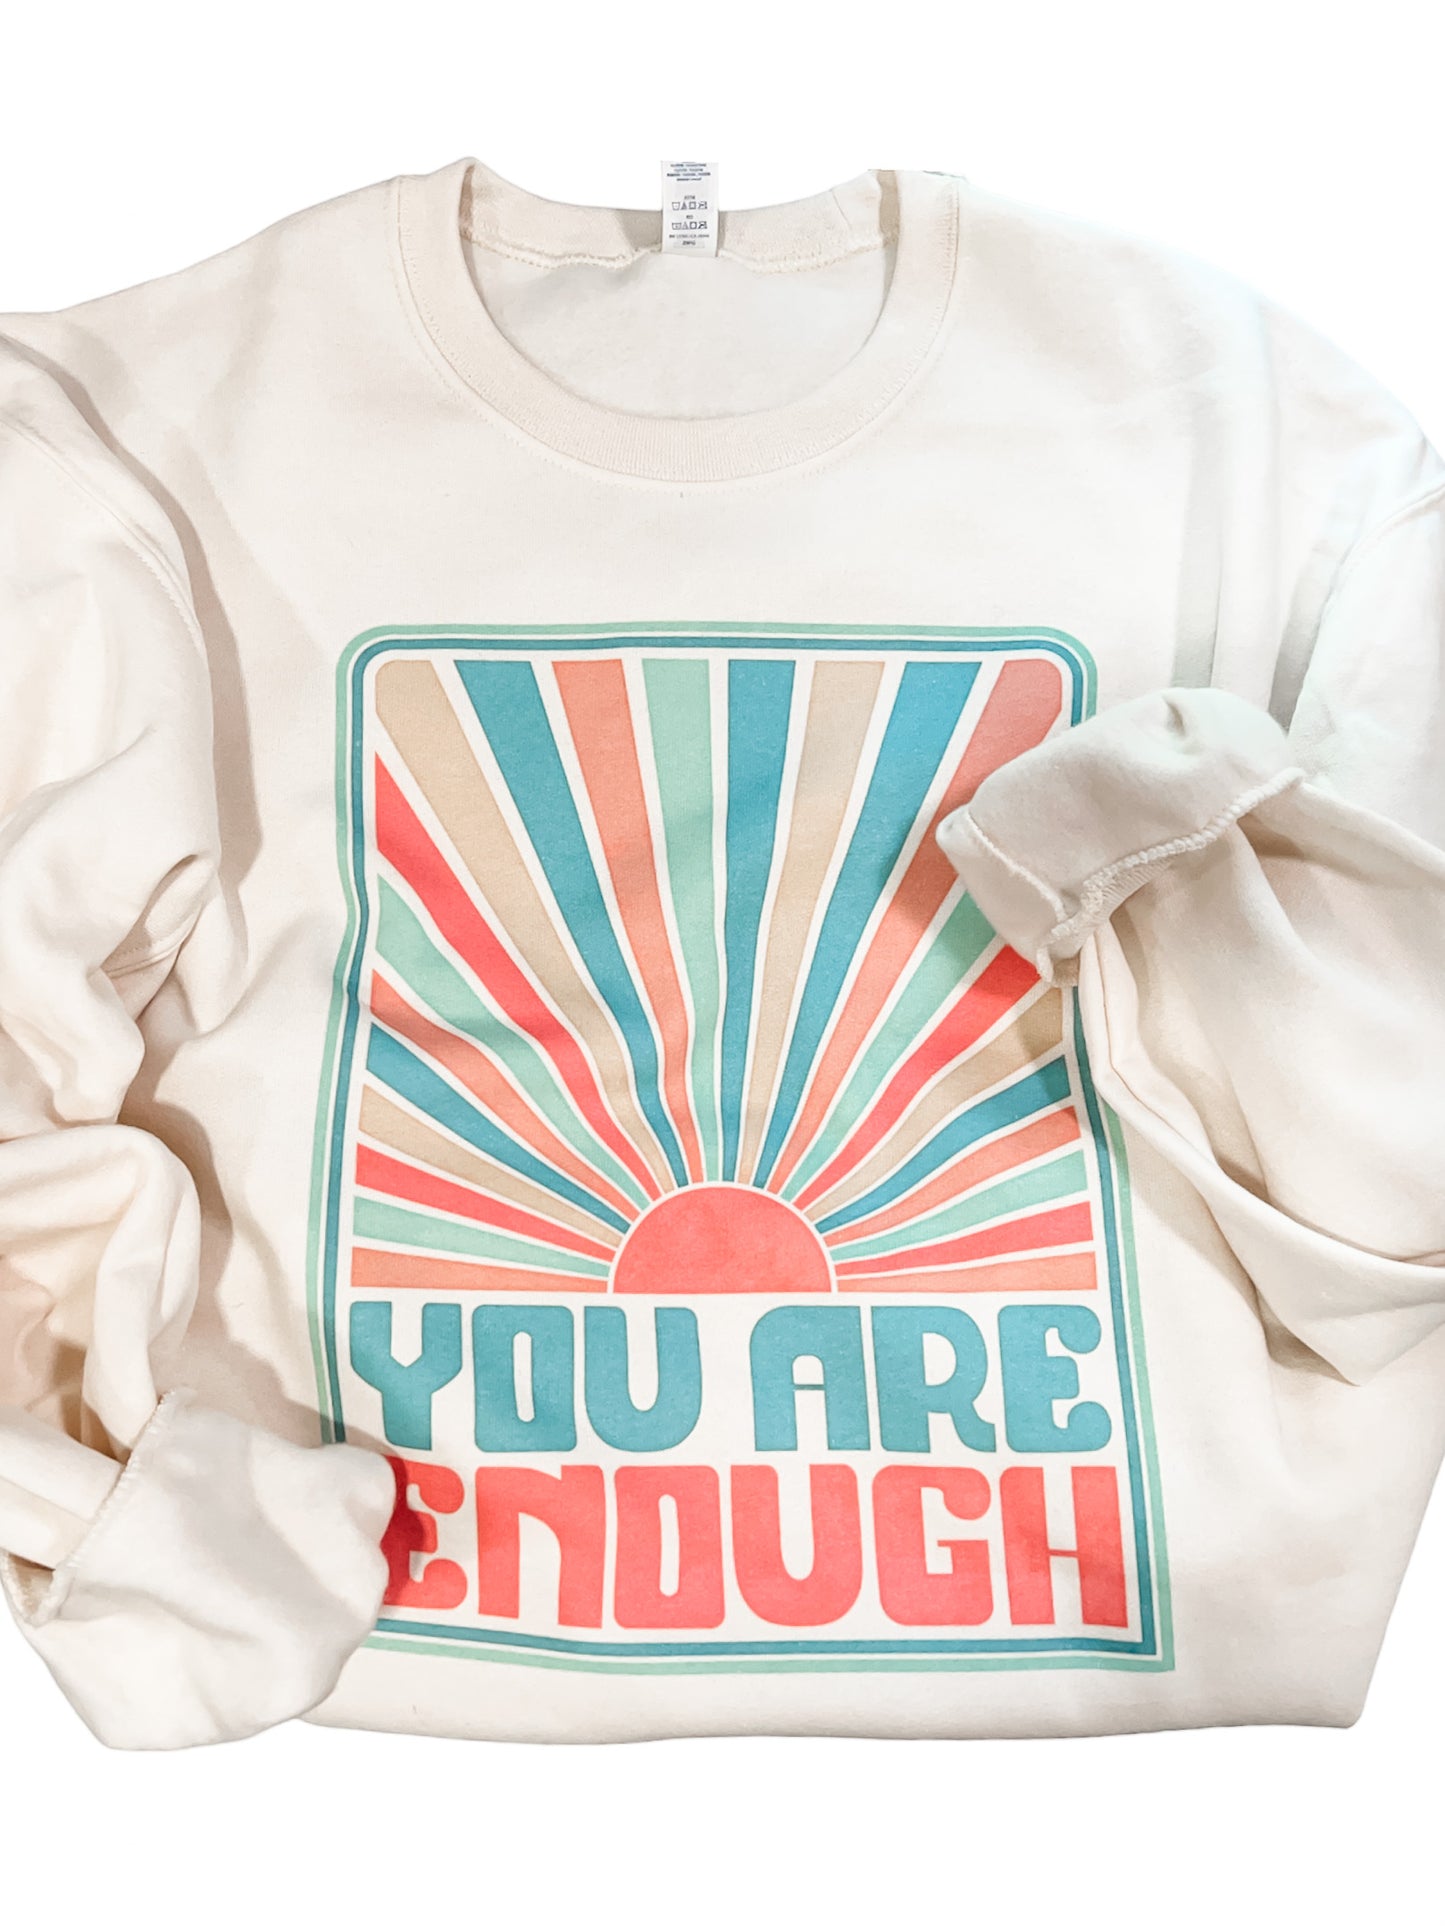 You are Enough Sweatshirt